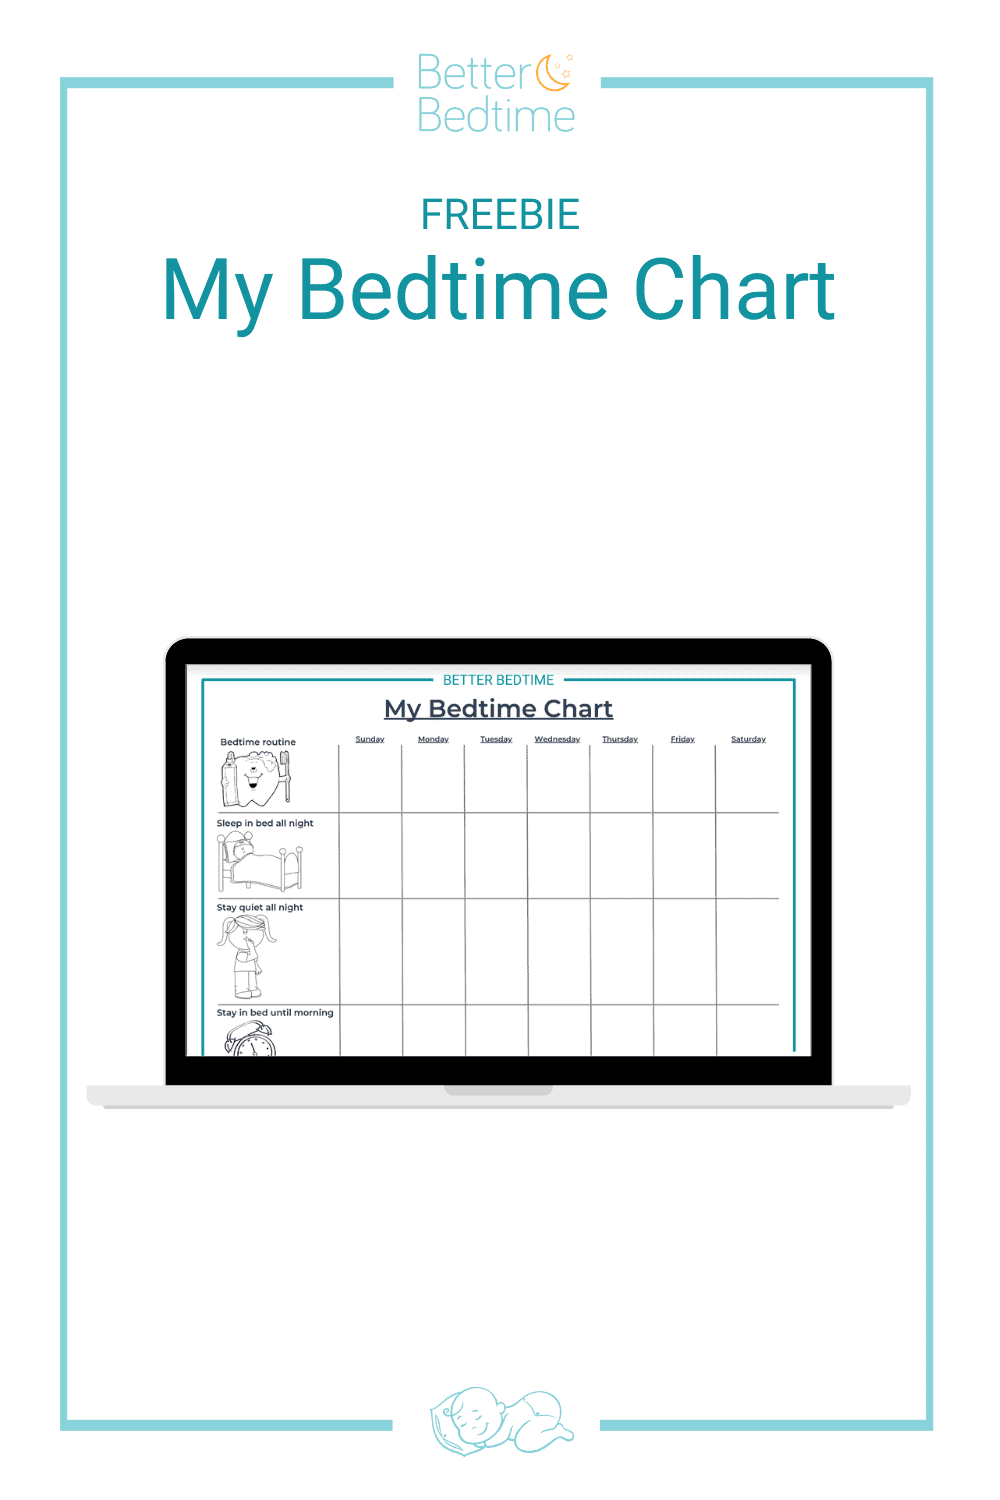 FREEBIE: My Bedtime Chart